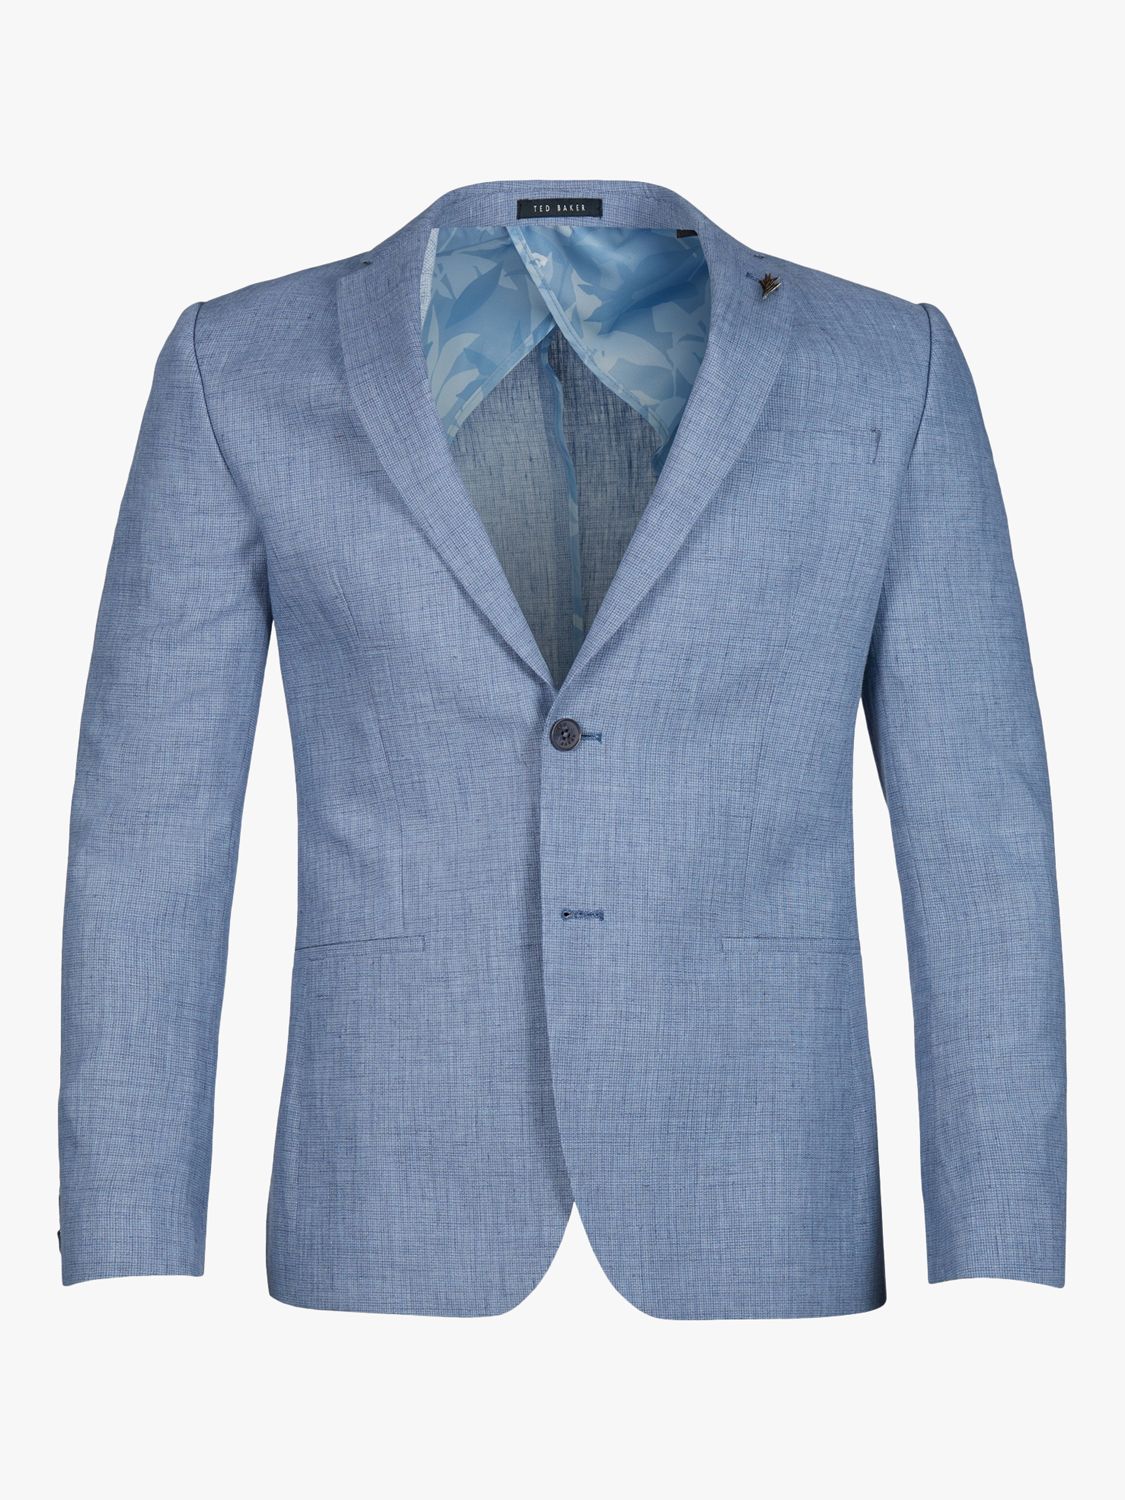 Ted Baker Hydra Linen Slim Fit Suit Jacket, Blue at John Lewis & Partners